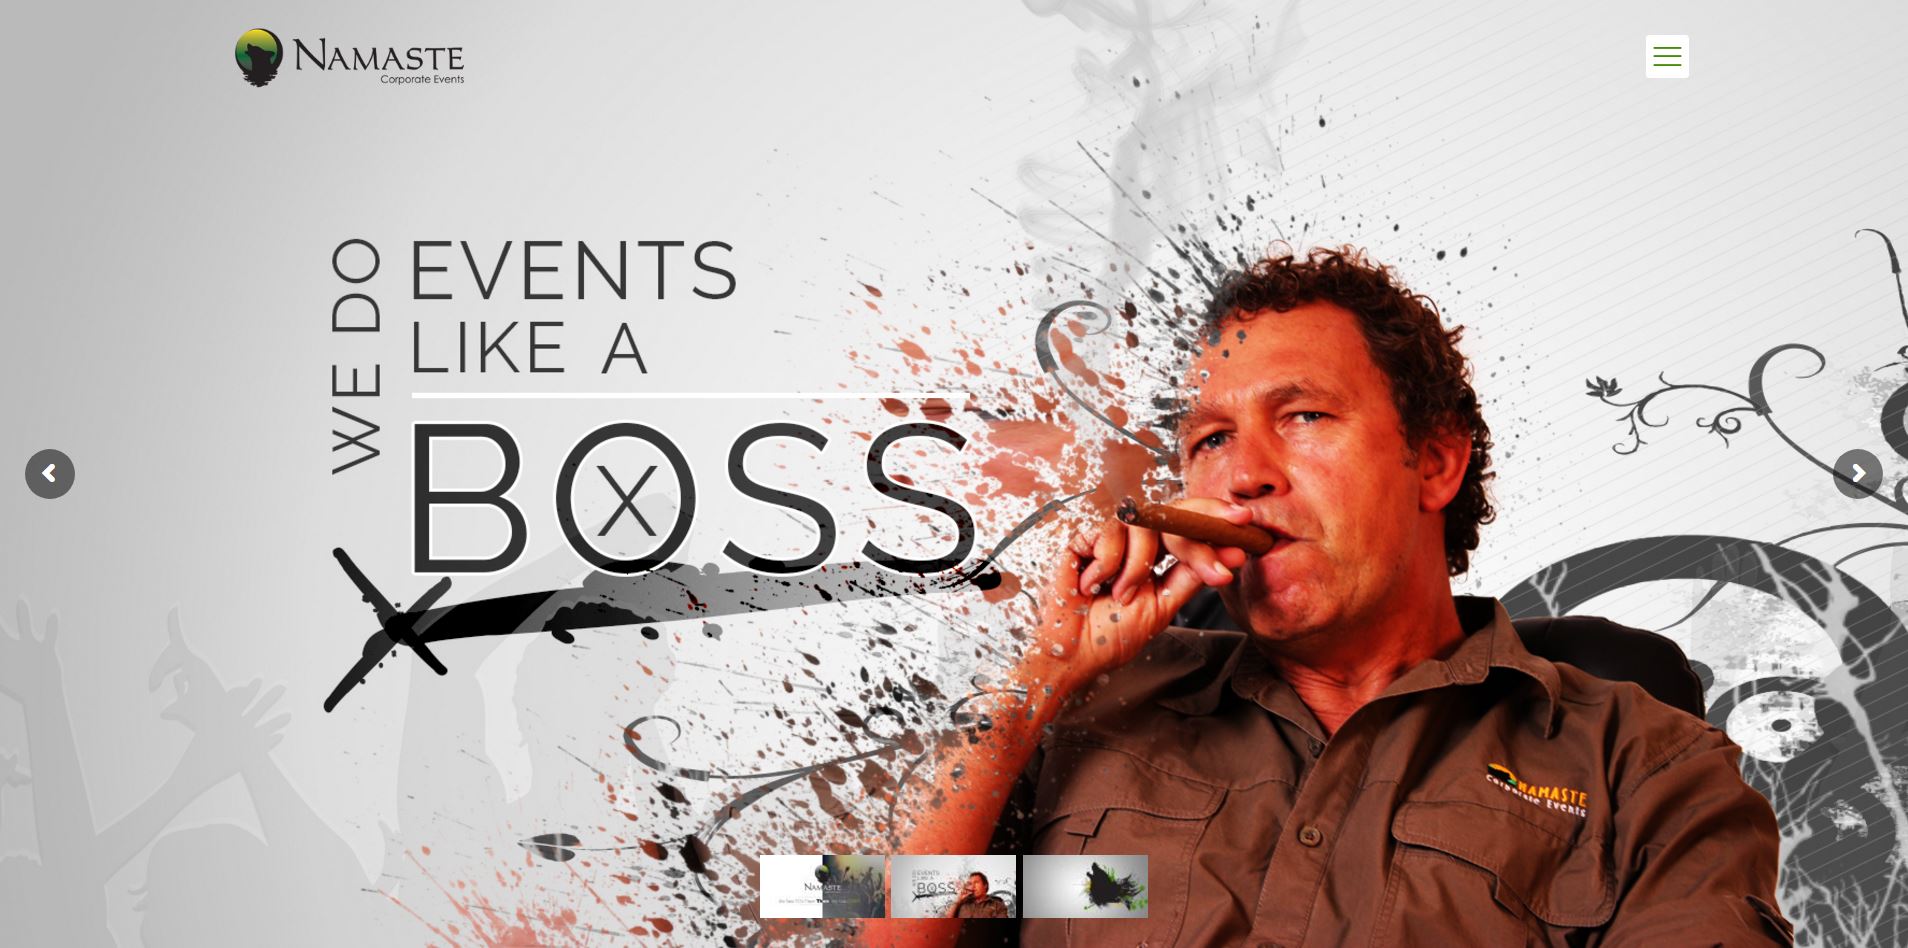 Peri Peri Creative-Namaste Corporate Events-web banner like a boss